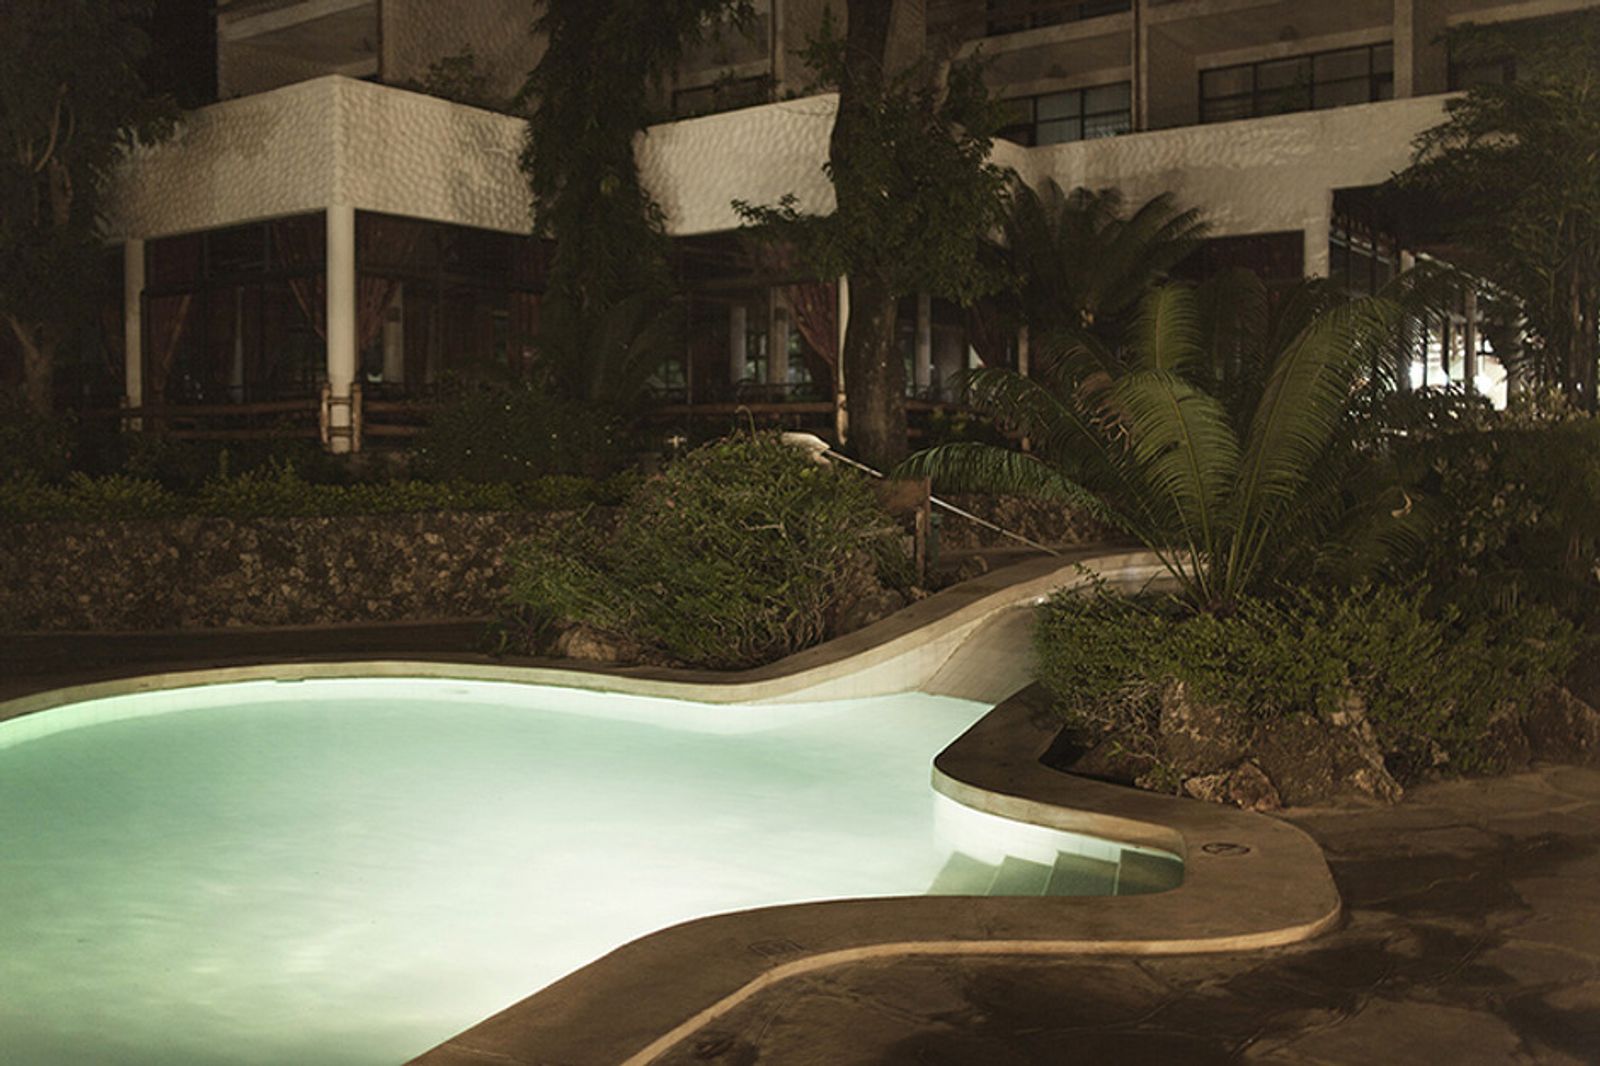 © Sofie Amalie Klougart - The swimming pool at Renates hotel.